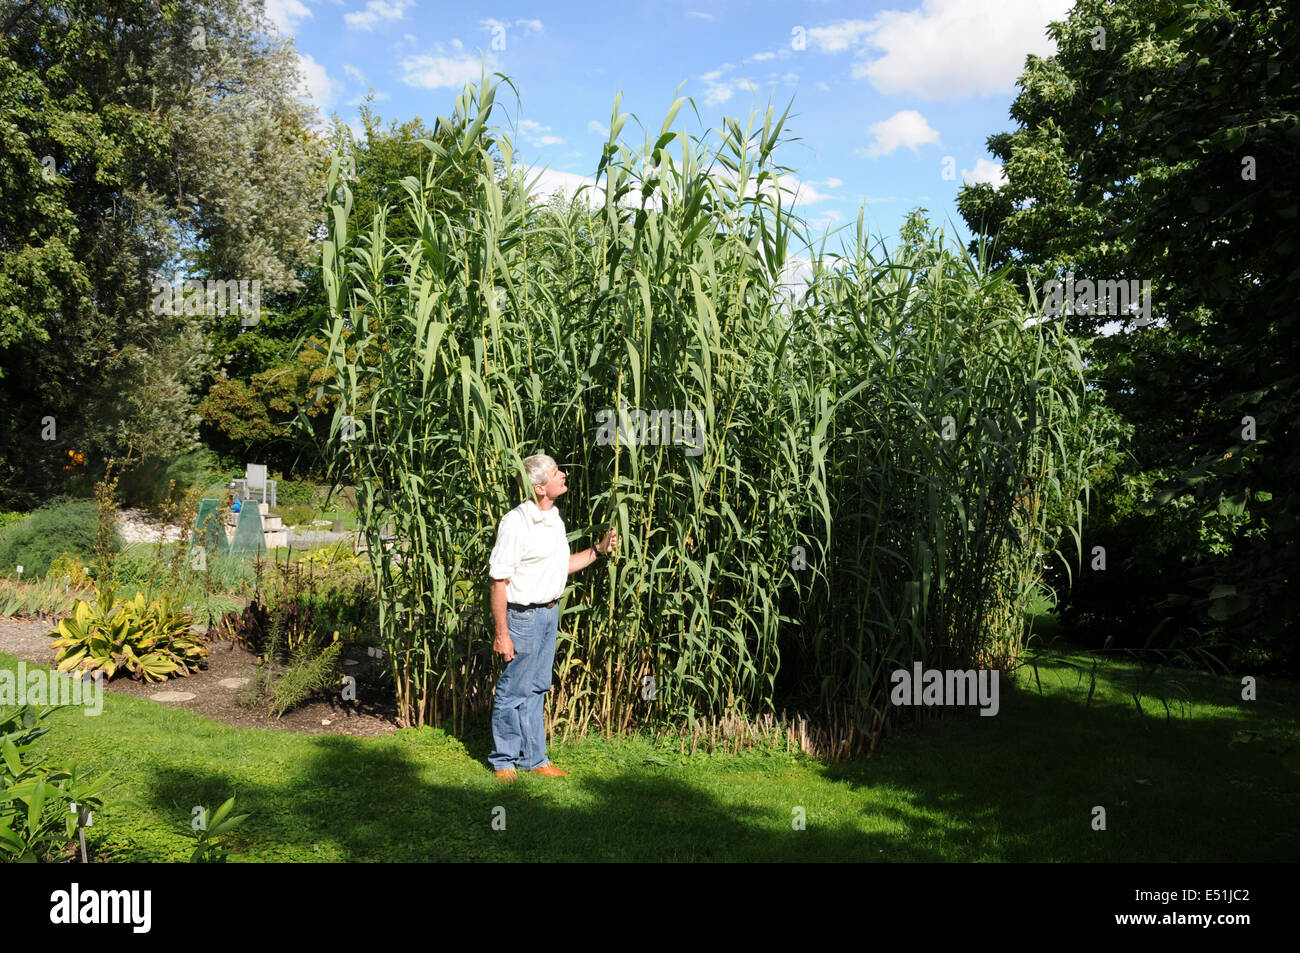 Giant cane Stock Photo